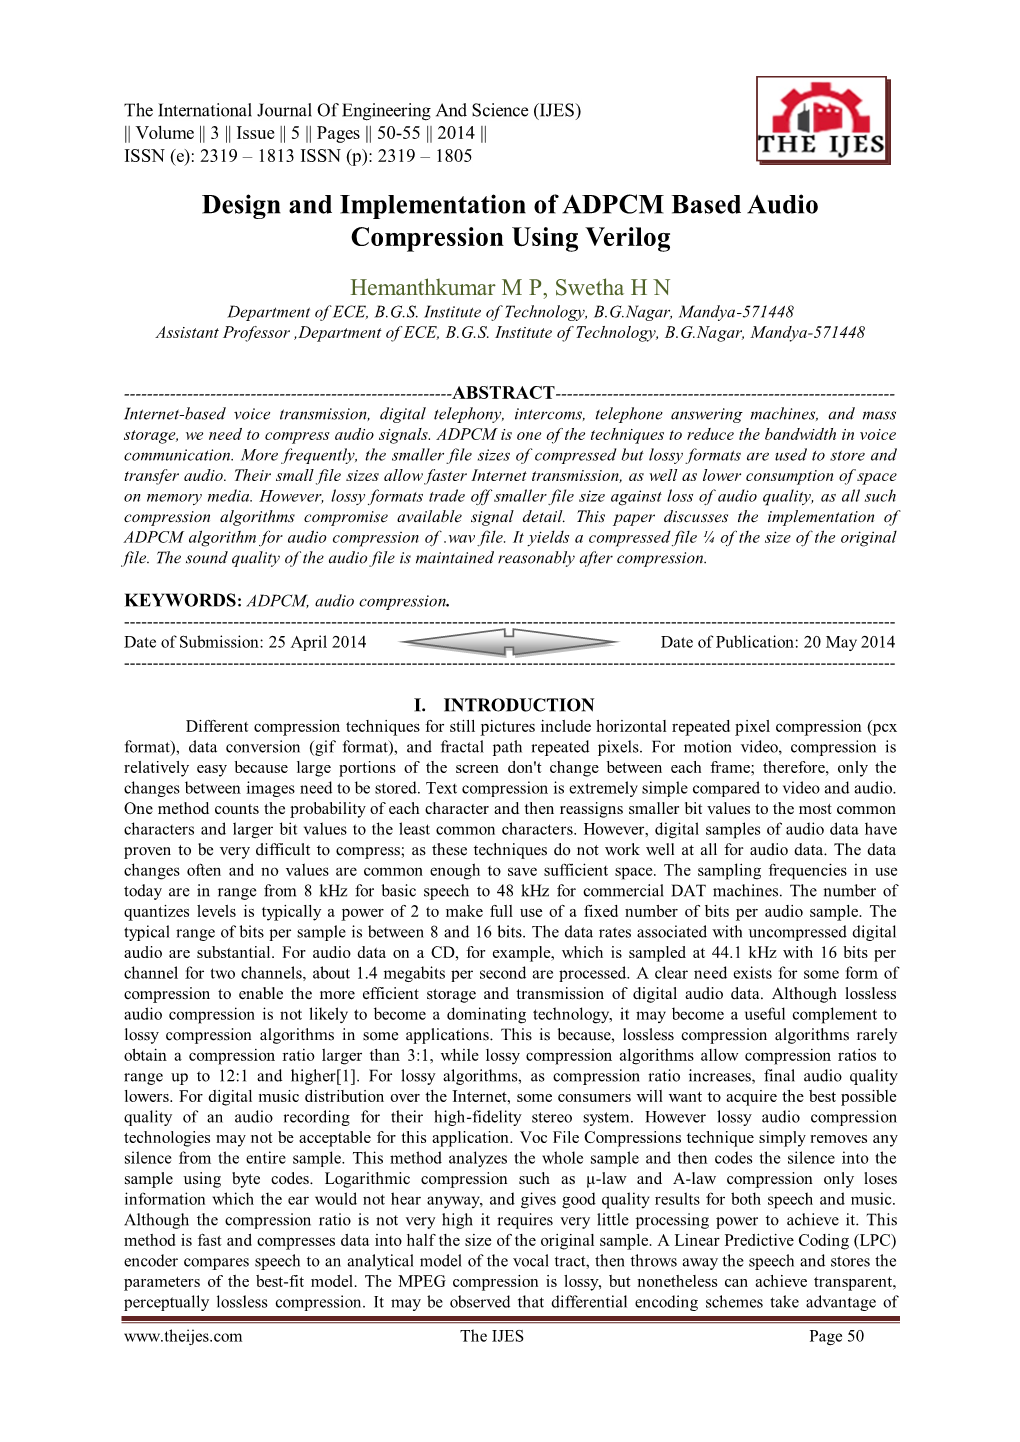 Design and Implementation of ADPCM Based Audio Compression Using Verilog